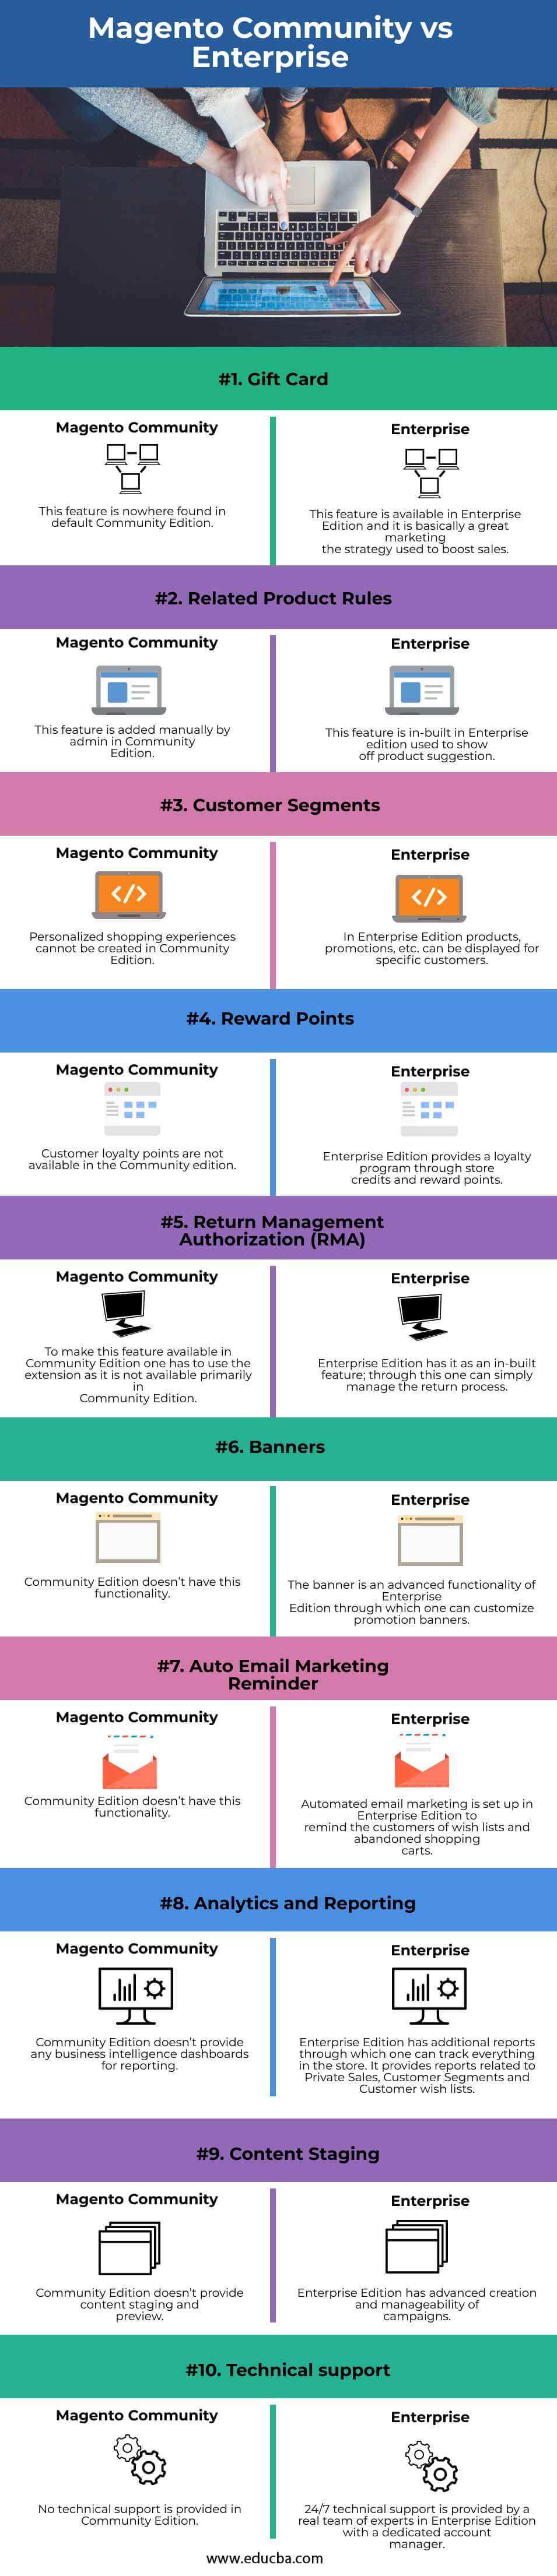 Magento-Community-vs-Enterprise-info